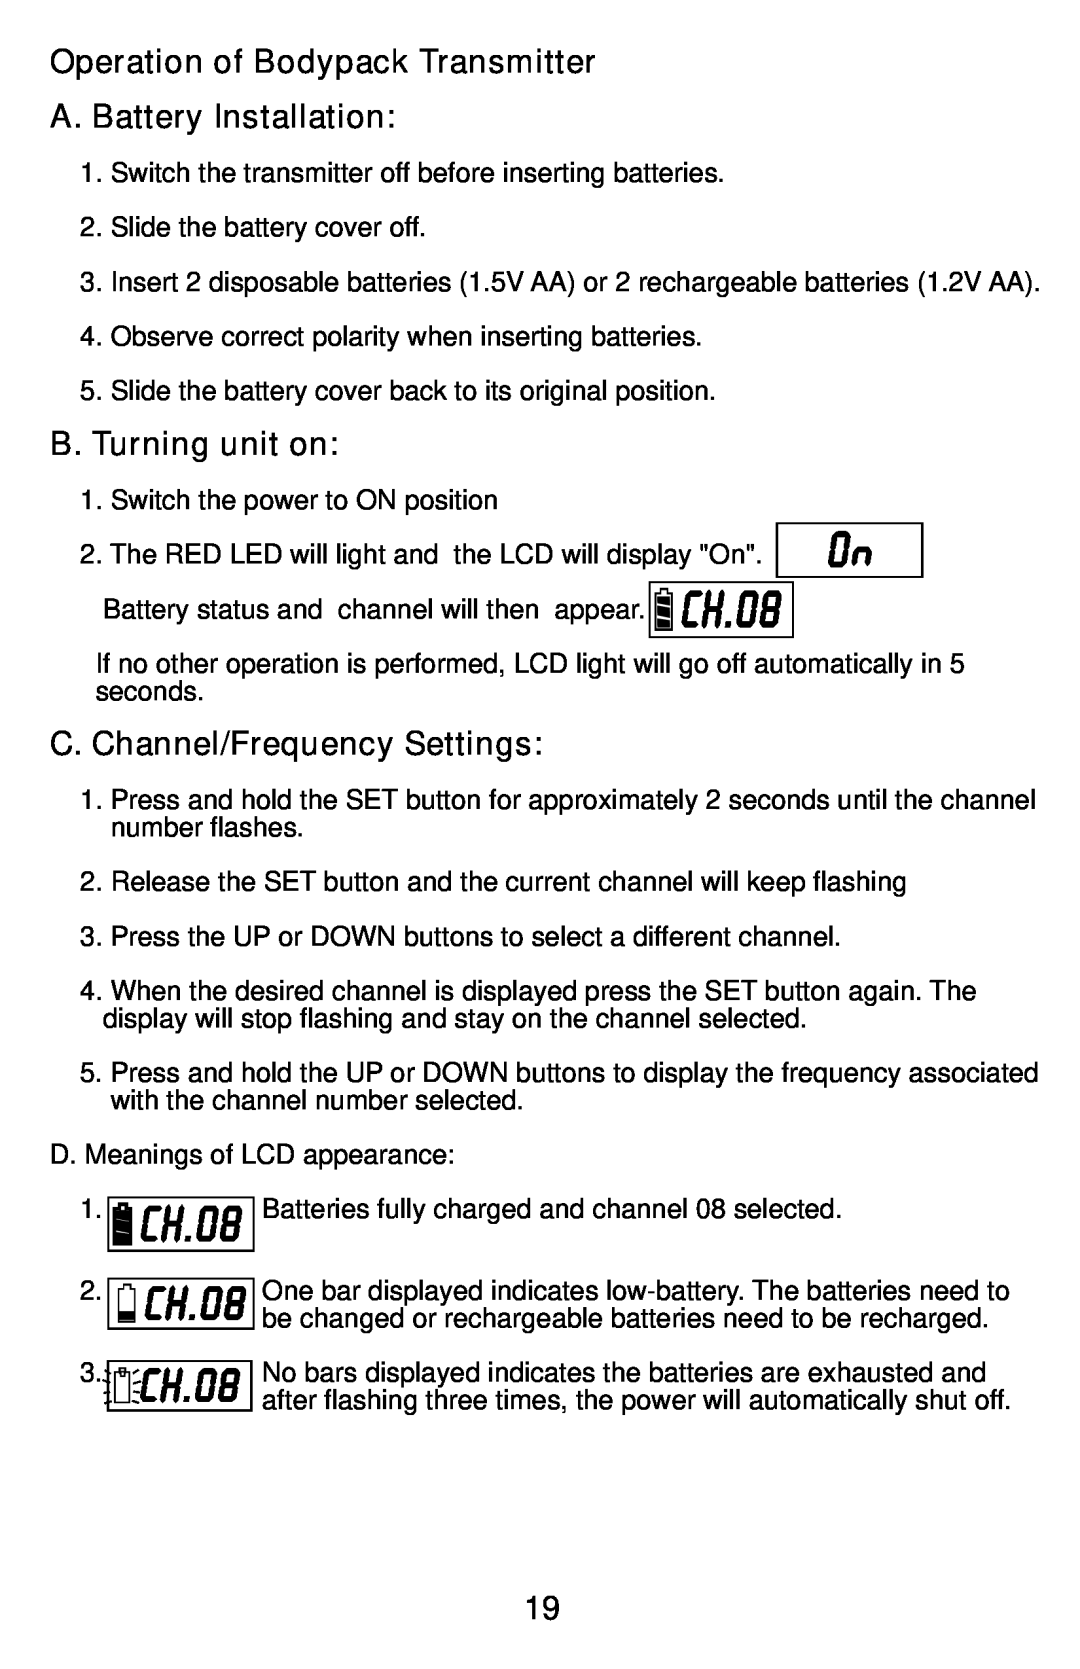 Traveler AS-TV8 manual Operation of Bodypack Transmitter, A. Battery Installation, B.Turning unit on 